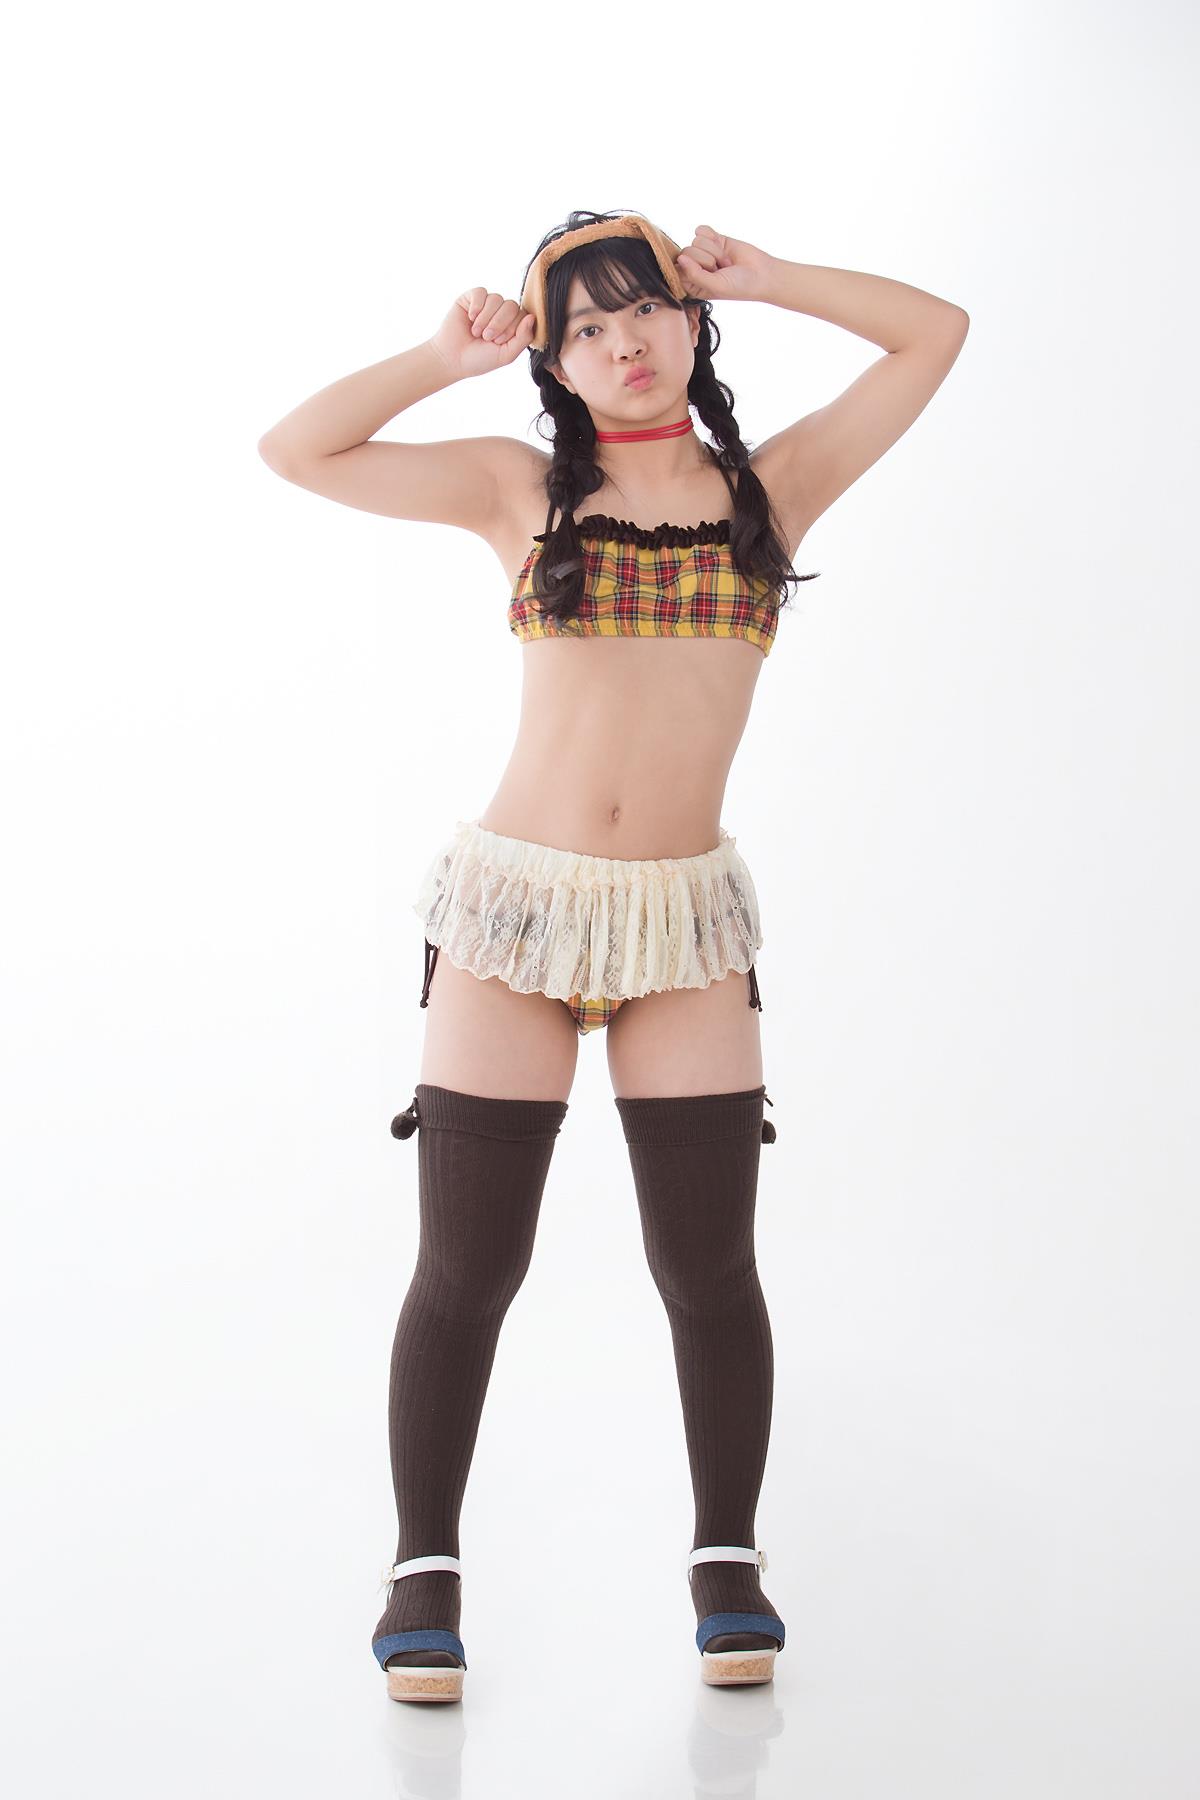 Minisuka.tv Saria Natsume 夏目咲莉愛 - Premium Gallery 2.5 - 9.jpg